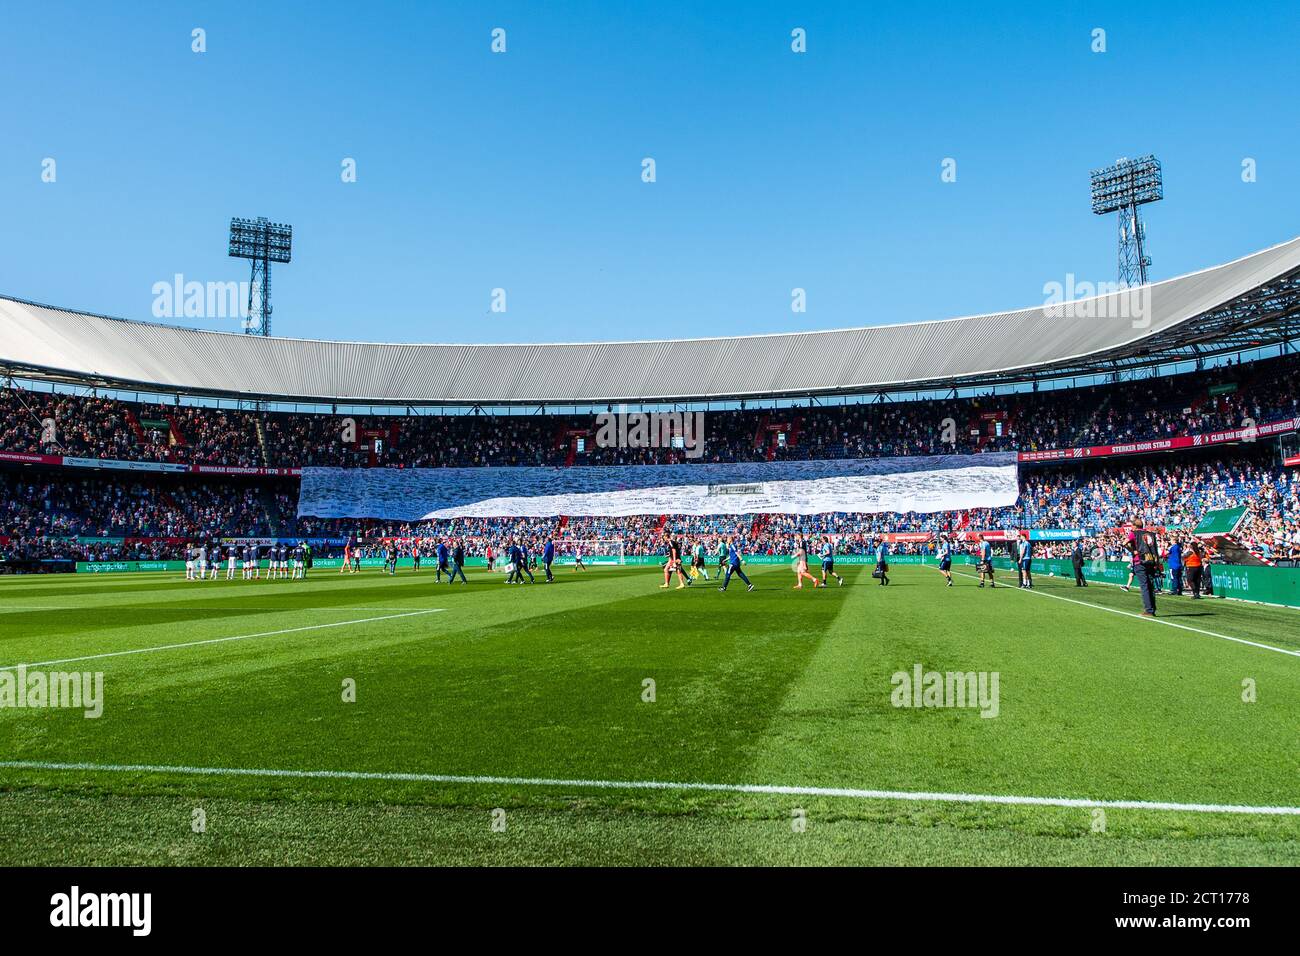 ROTTERDAM, NETHERLANDS - SEPTEMBER 20: View of stadium De Kuip before the eredivisie match between Feyenoord and FC Twente at stadium De Kuip on september 20, 2020 in Rotterdam, Netherlands. *** Local Caption *** Stock Photo